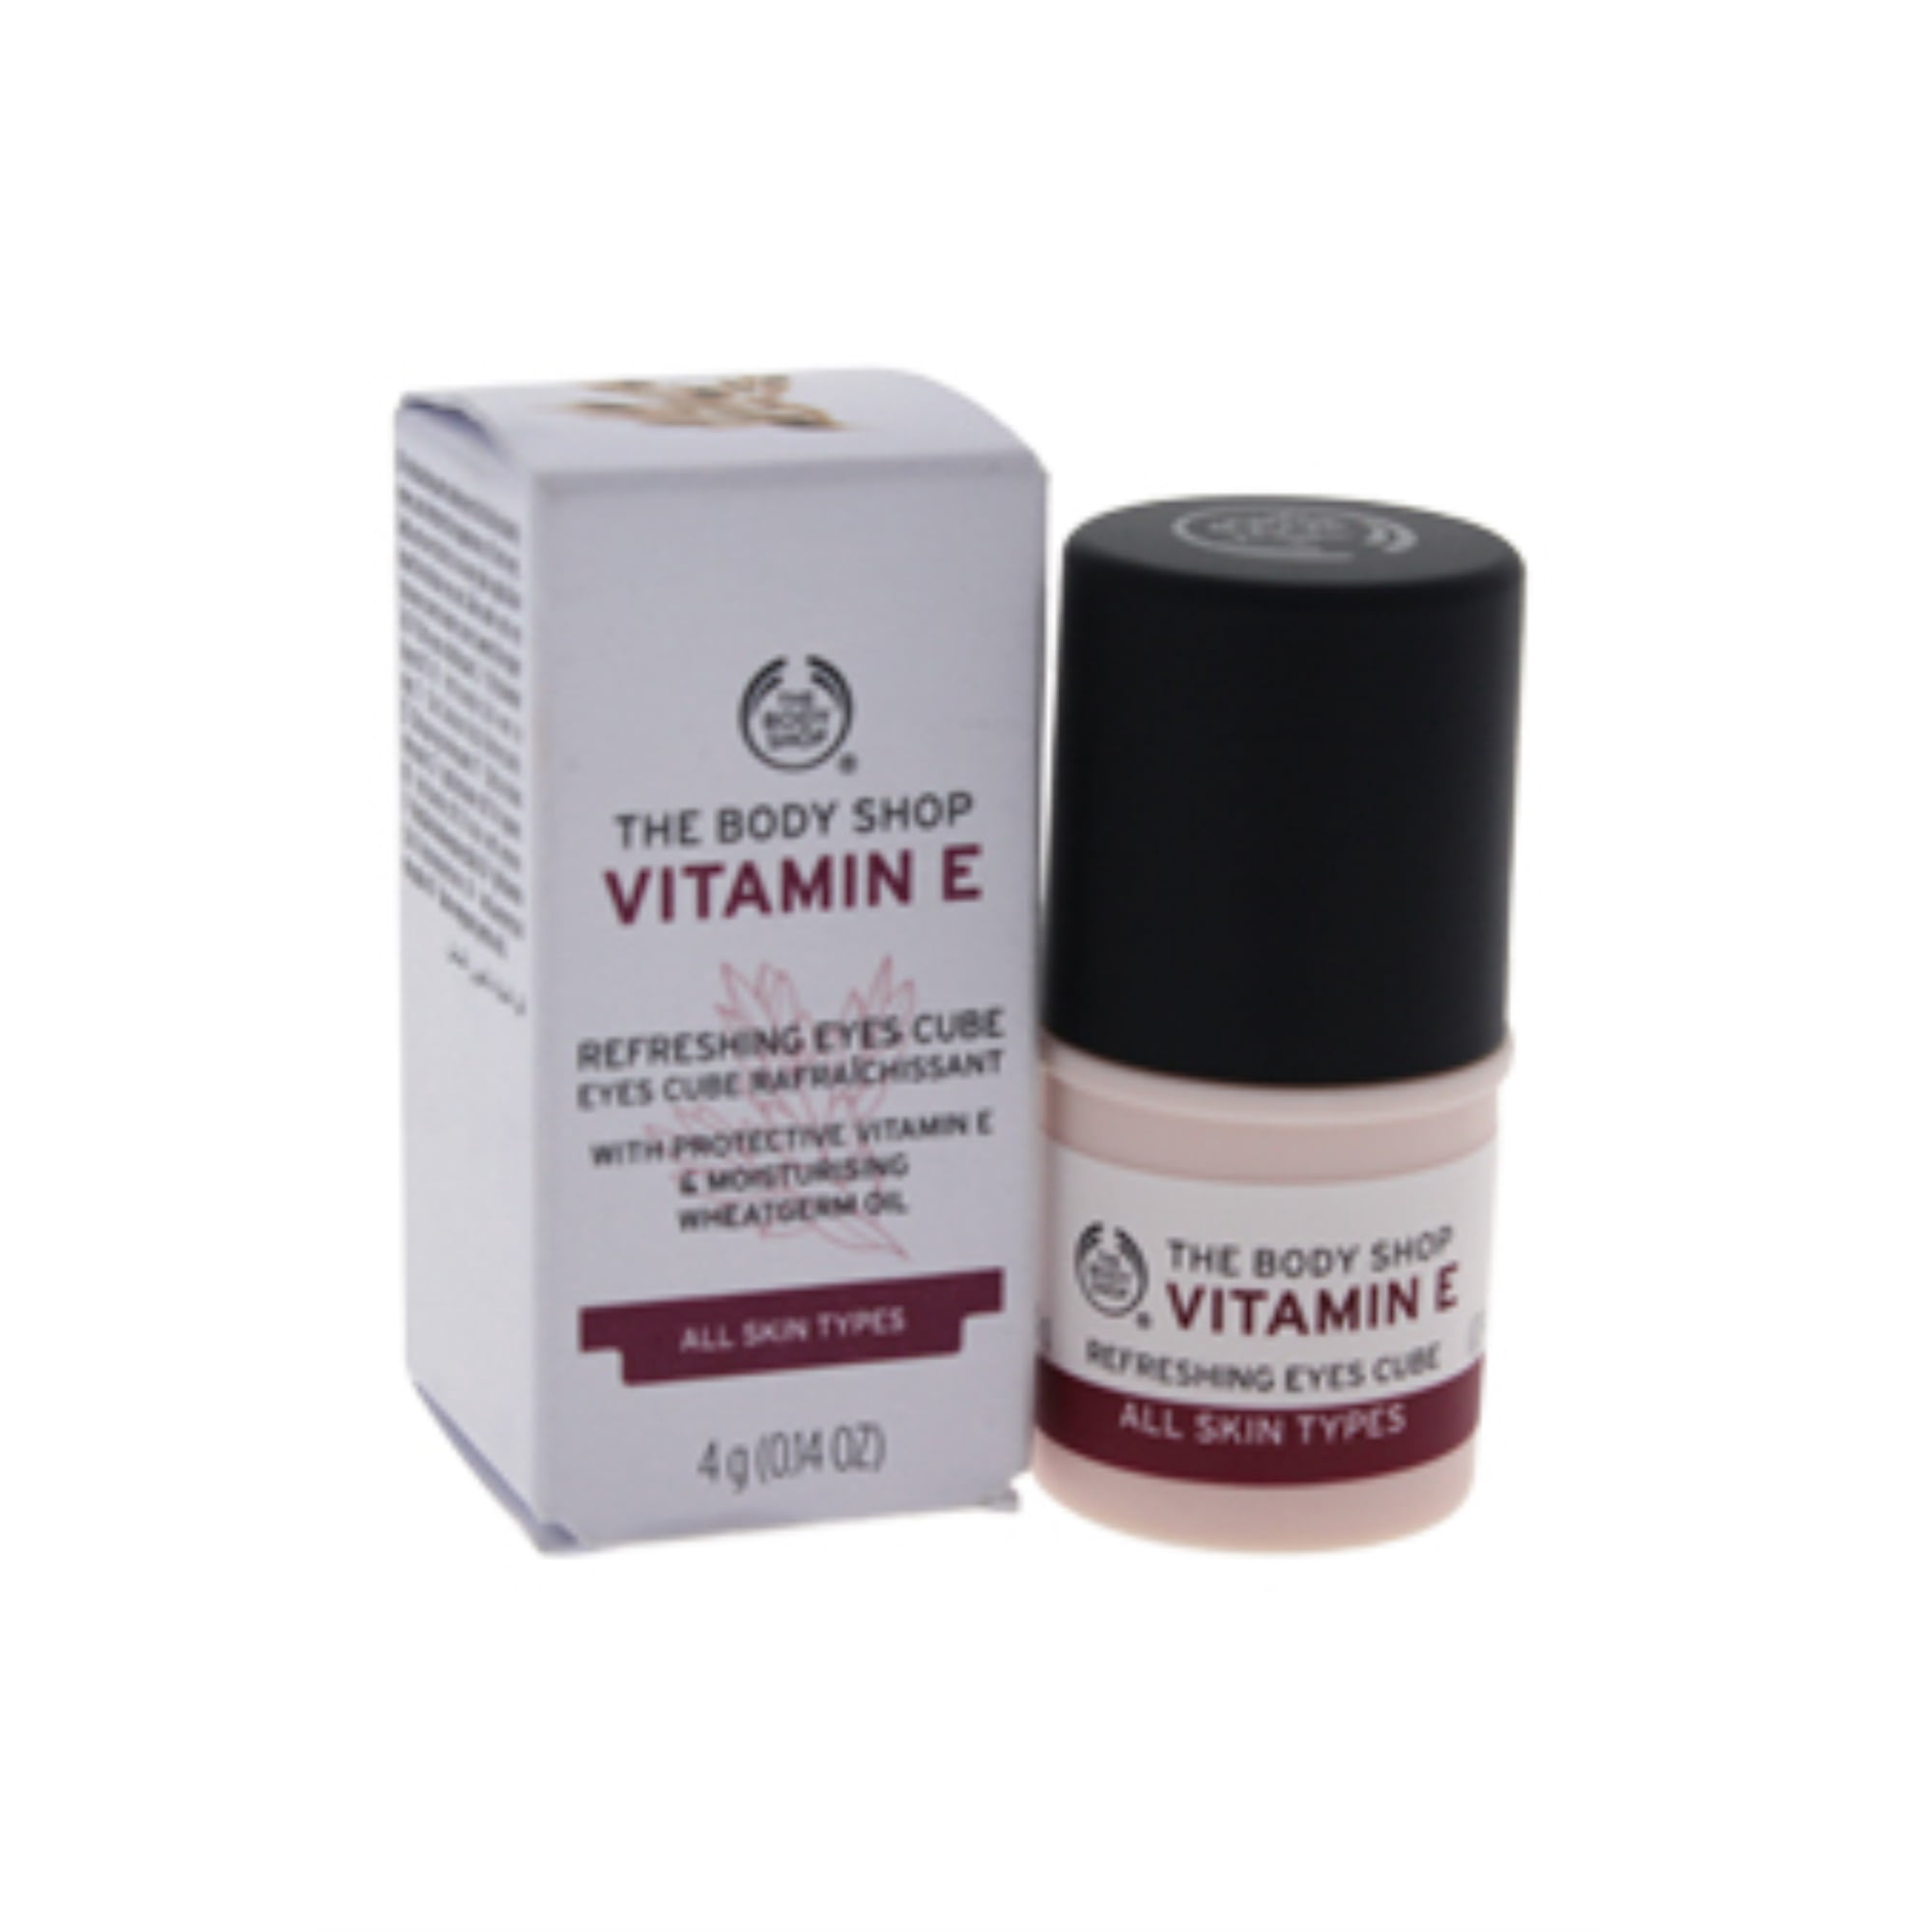 Magazijn Bestuiven metgezel Vitamin E Refreshing Eyes Cube - All Skin Types by The Body Shop for Unisex  - 0.14 oz Moisturiser | Walmart Canada